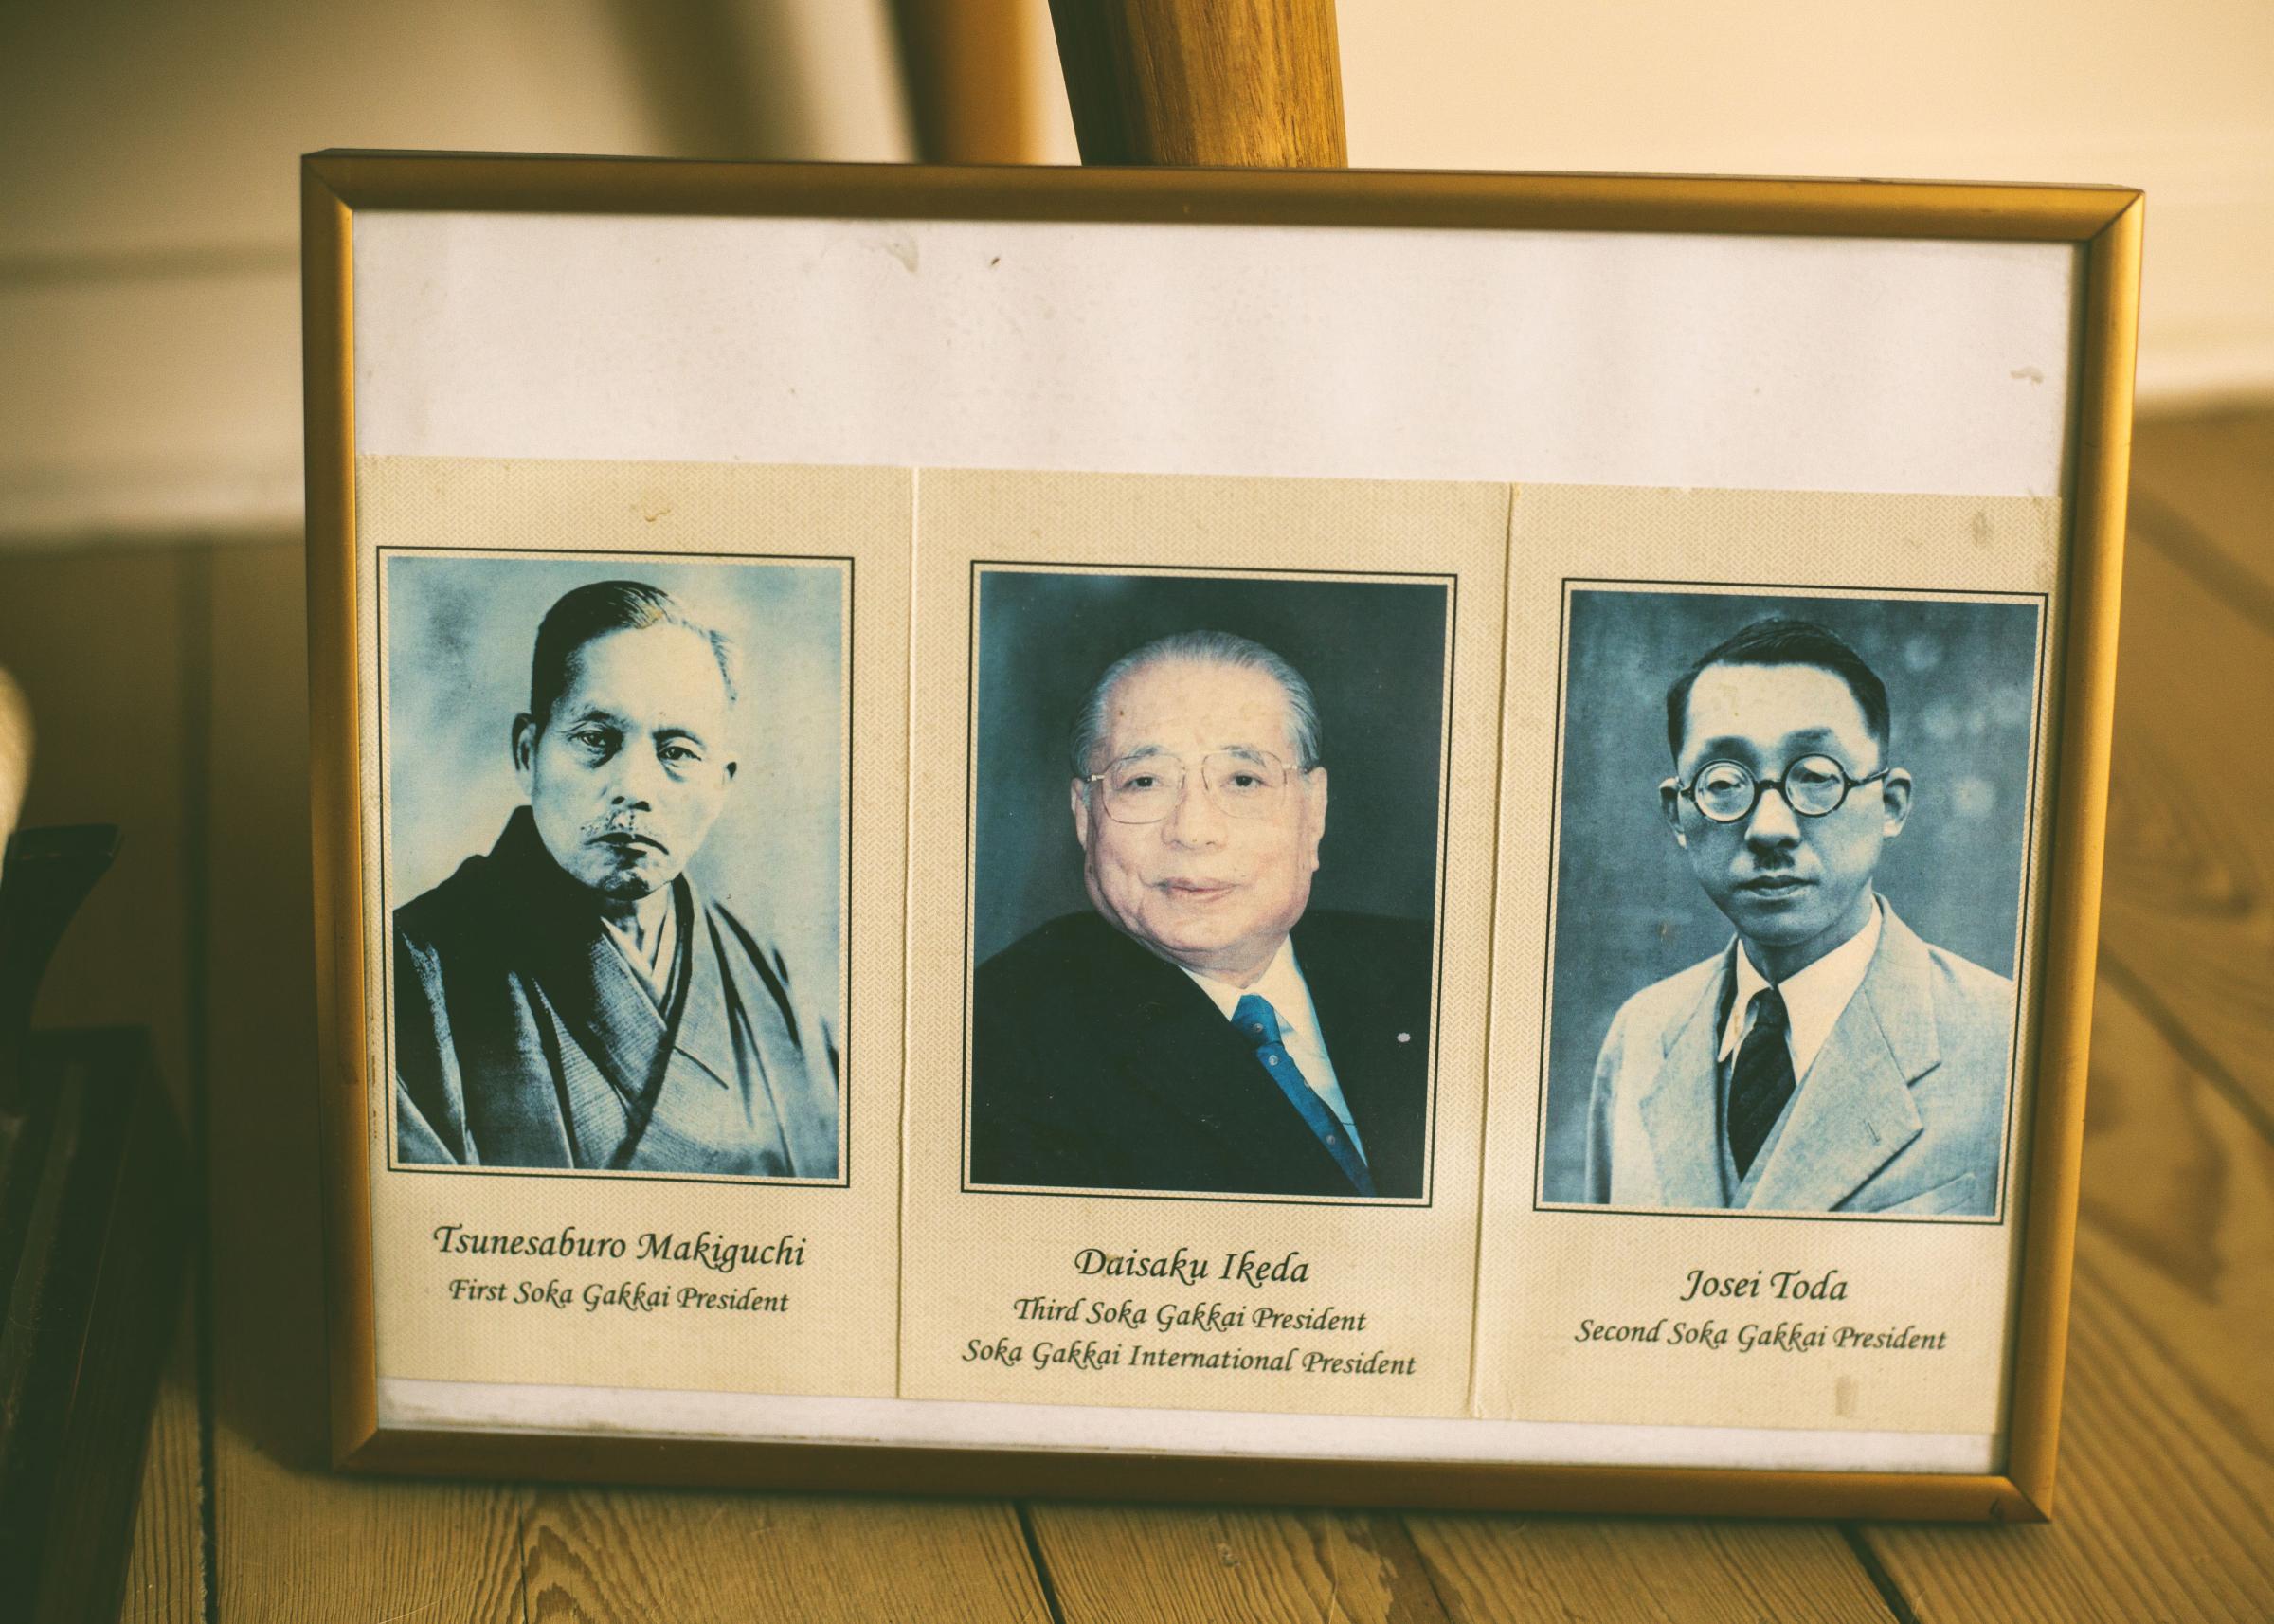 There is more -   The first three founders of Soka Gakkai, Tsunesaburo...